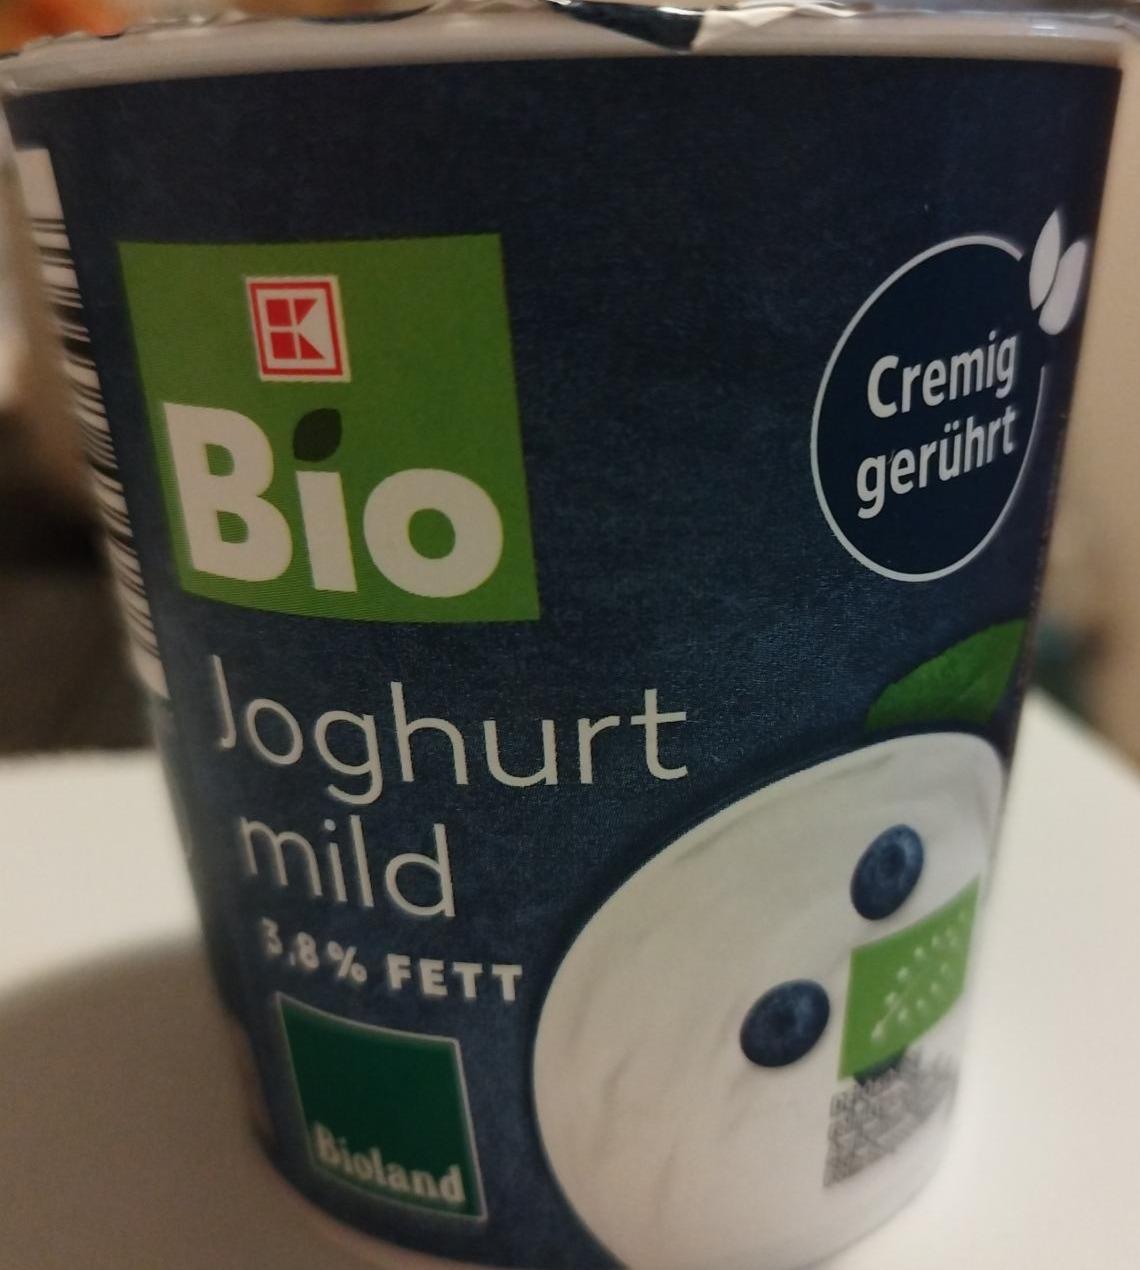 Joghurt mild kJ a kalórie, 3,8% hodnoty nutričné - K-Bio fett